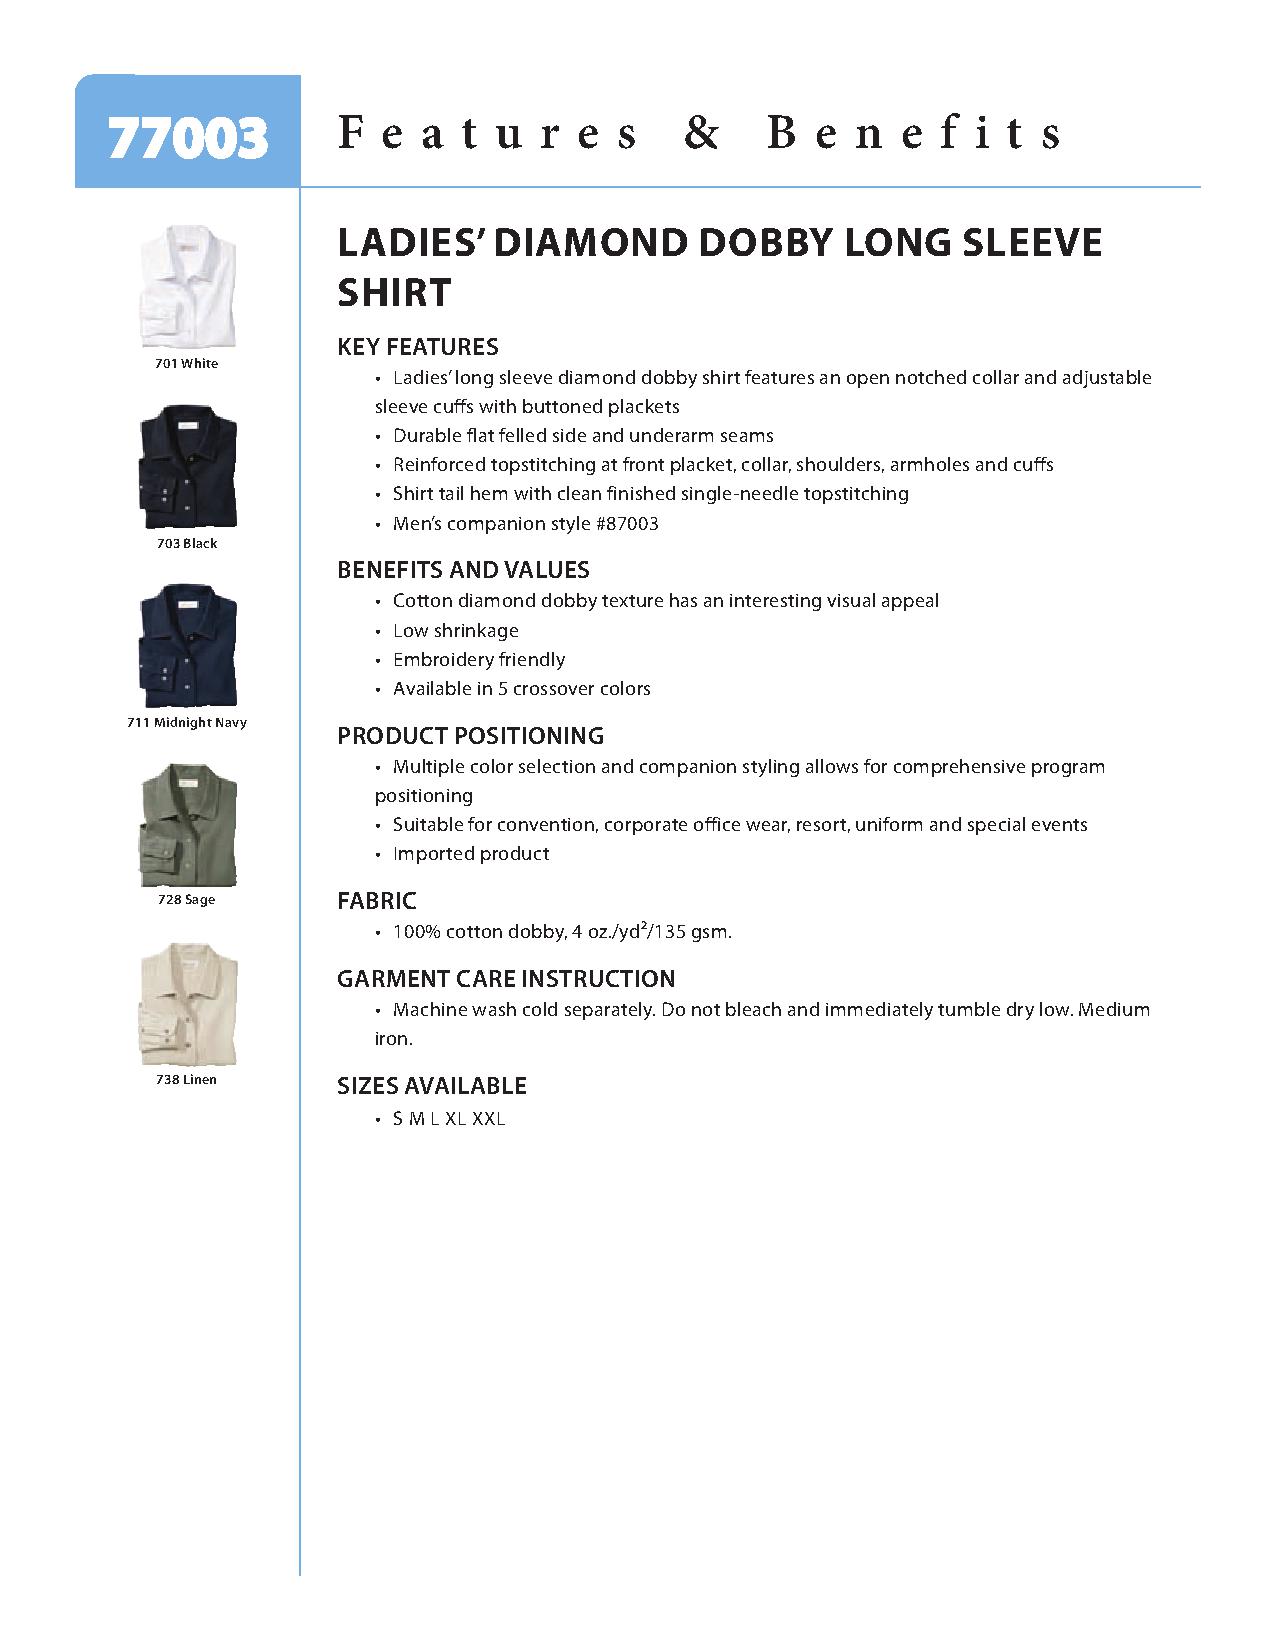 Ash City Cotton 77003 - Ladies' Diamond Dobby Long Sleeve Shirt